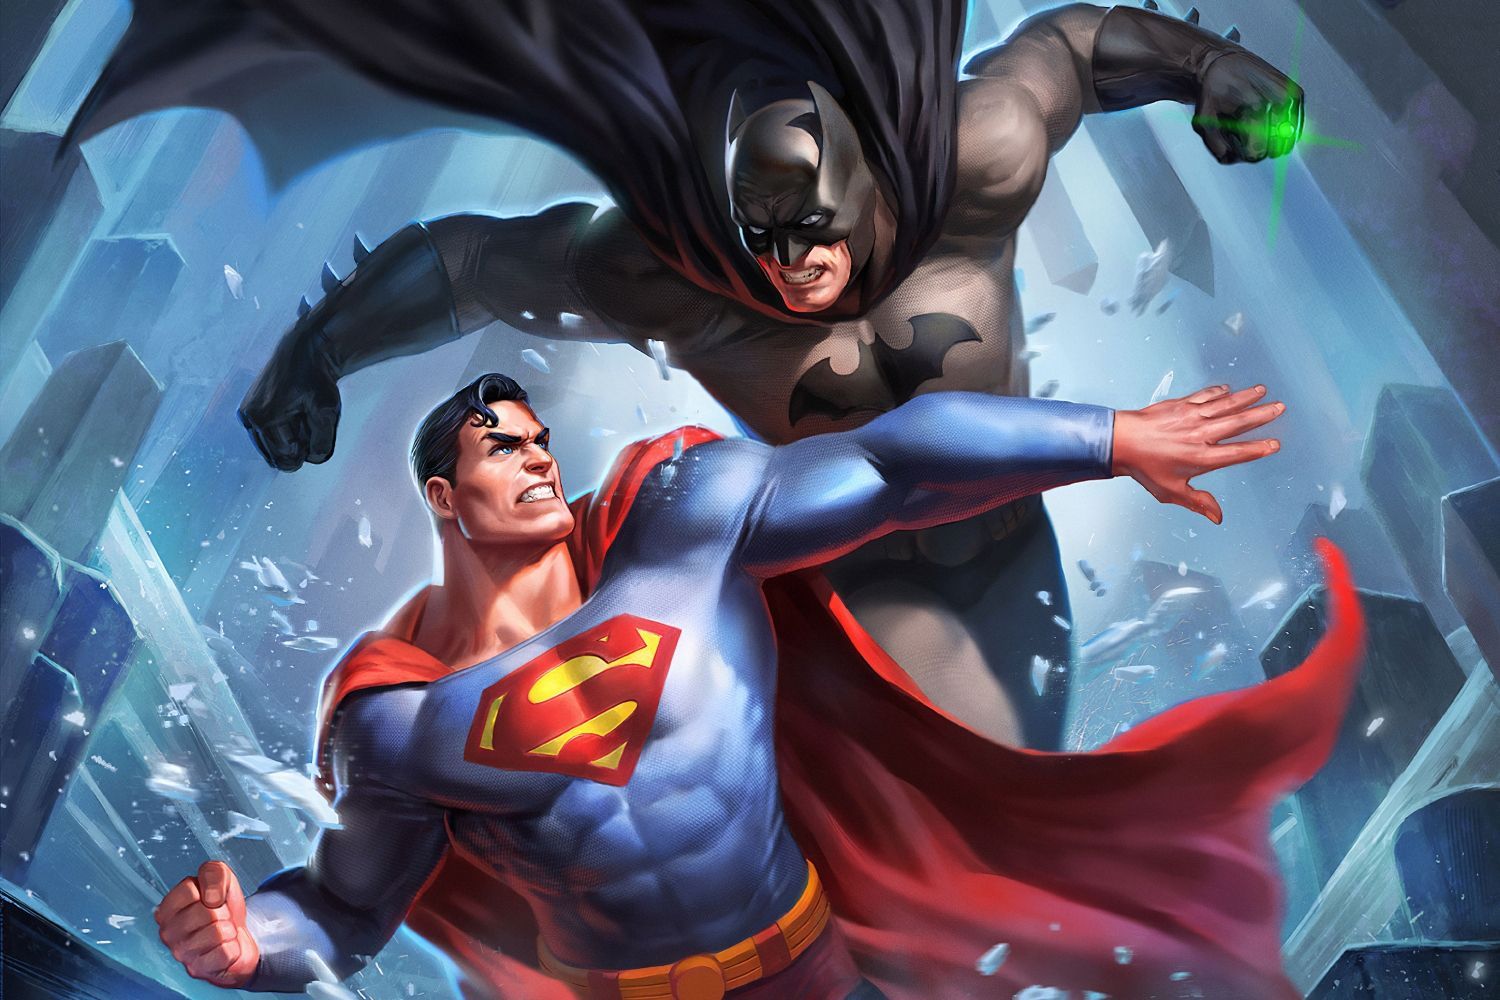 Постер "Супермен против Бэтмена" от Интернет магазина Милота